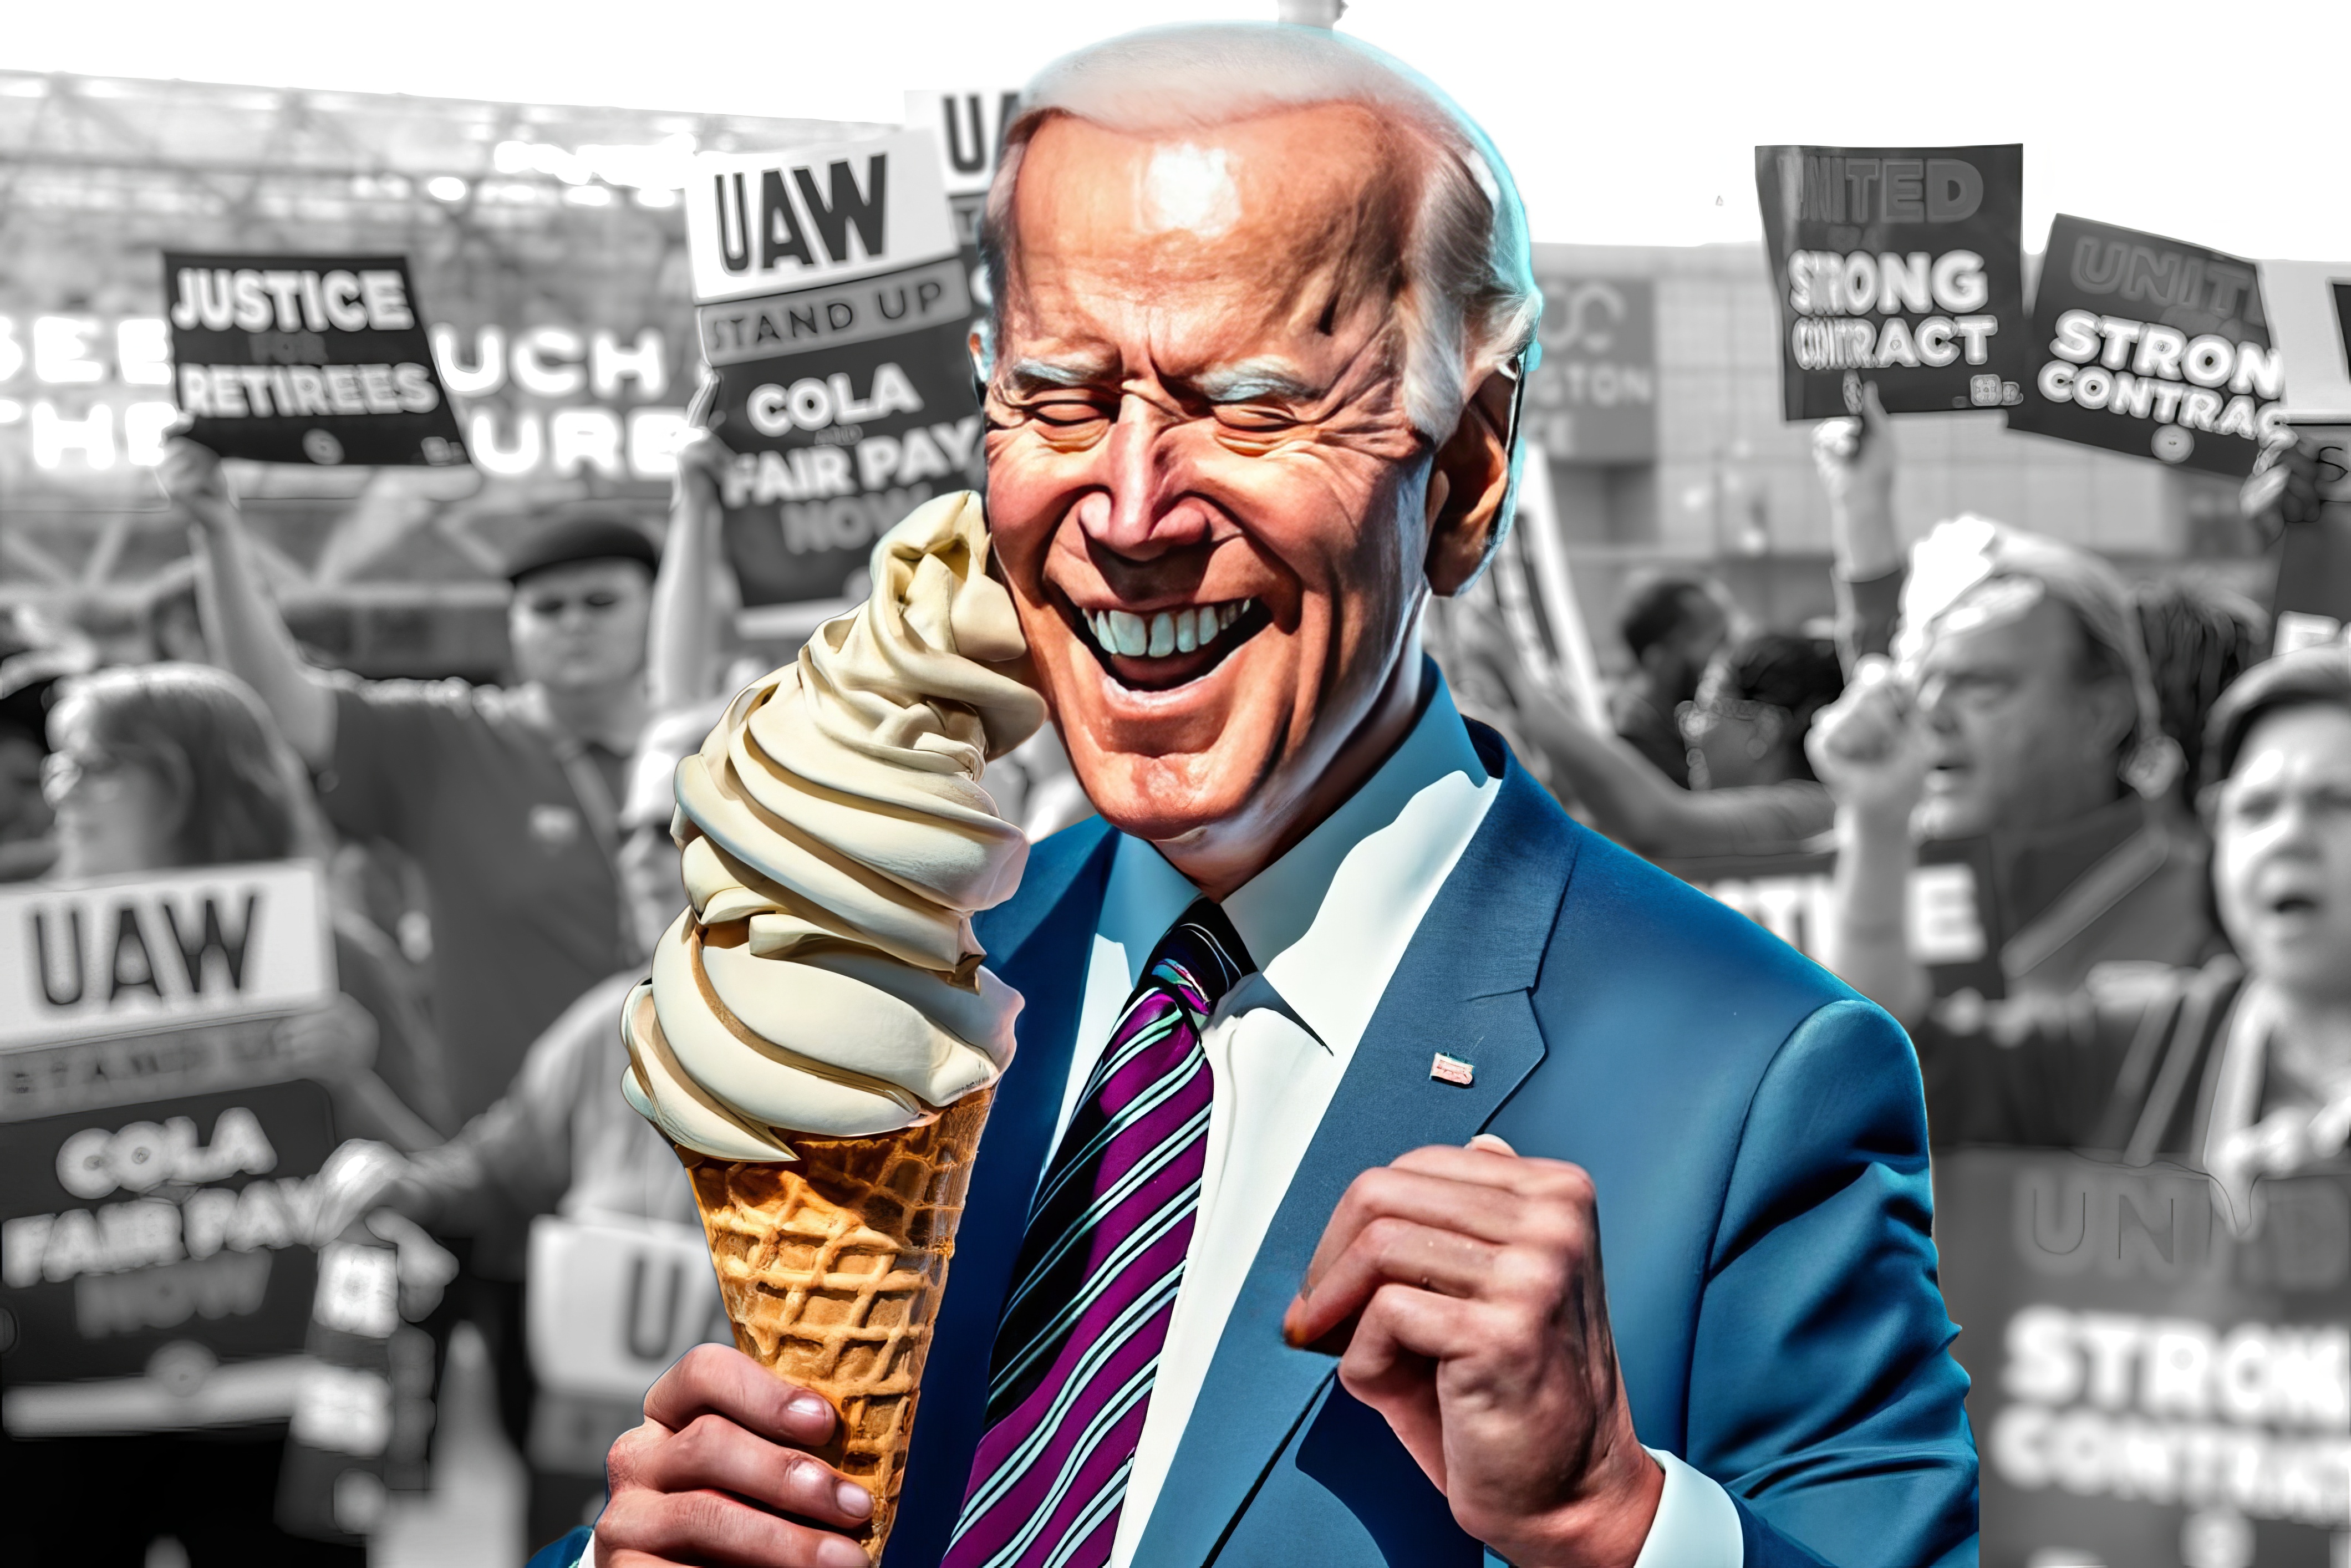 President Joe Biden eating ice cream at a UAW protest.